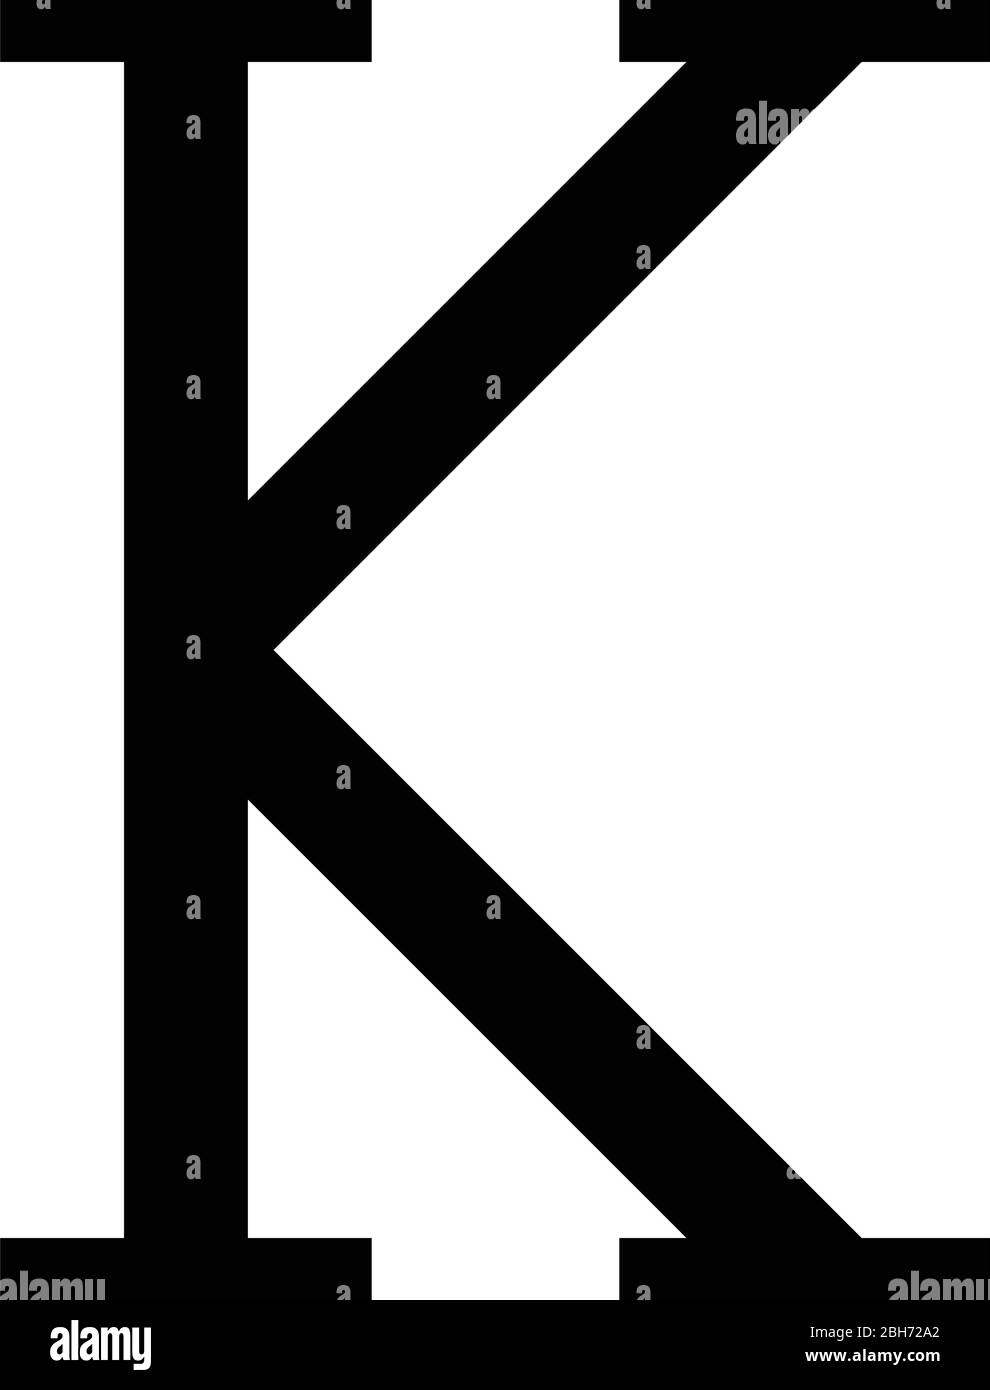 Kappa greek symbol capital letter uppercase font icon black color vector  illustration flat style simple image Stock Vector Image & Art - Alamy